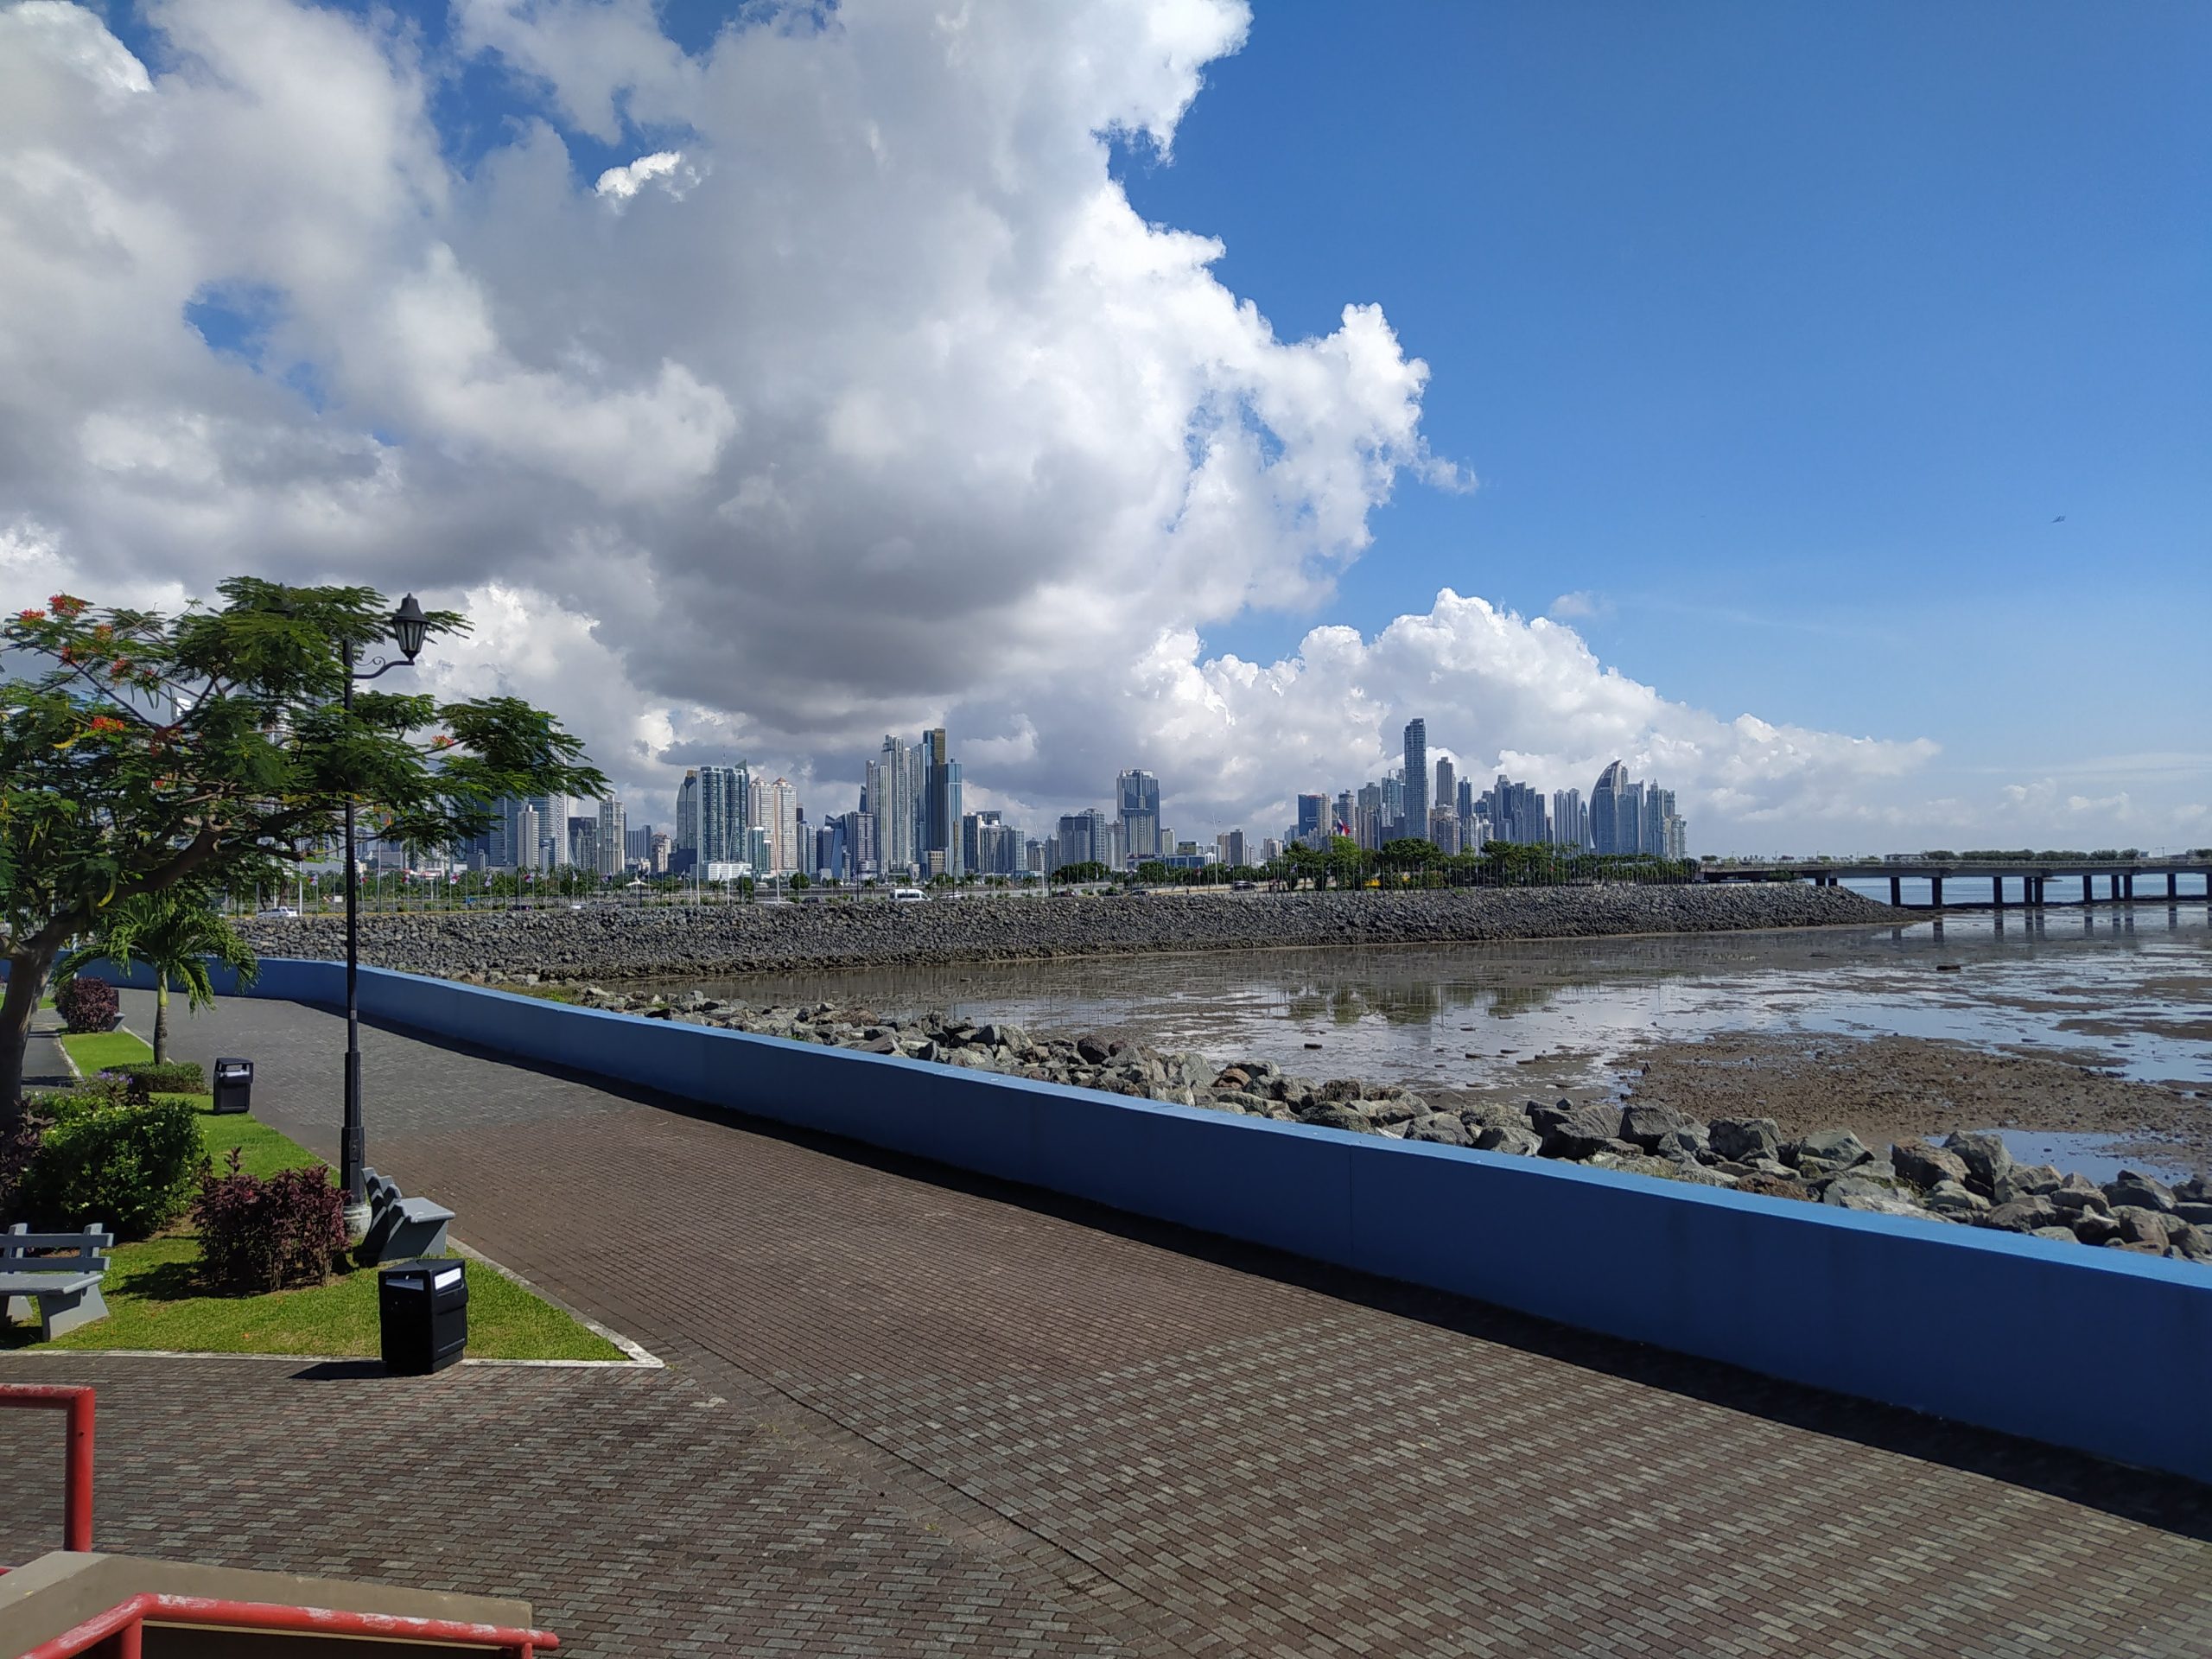 Skyline Panama City